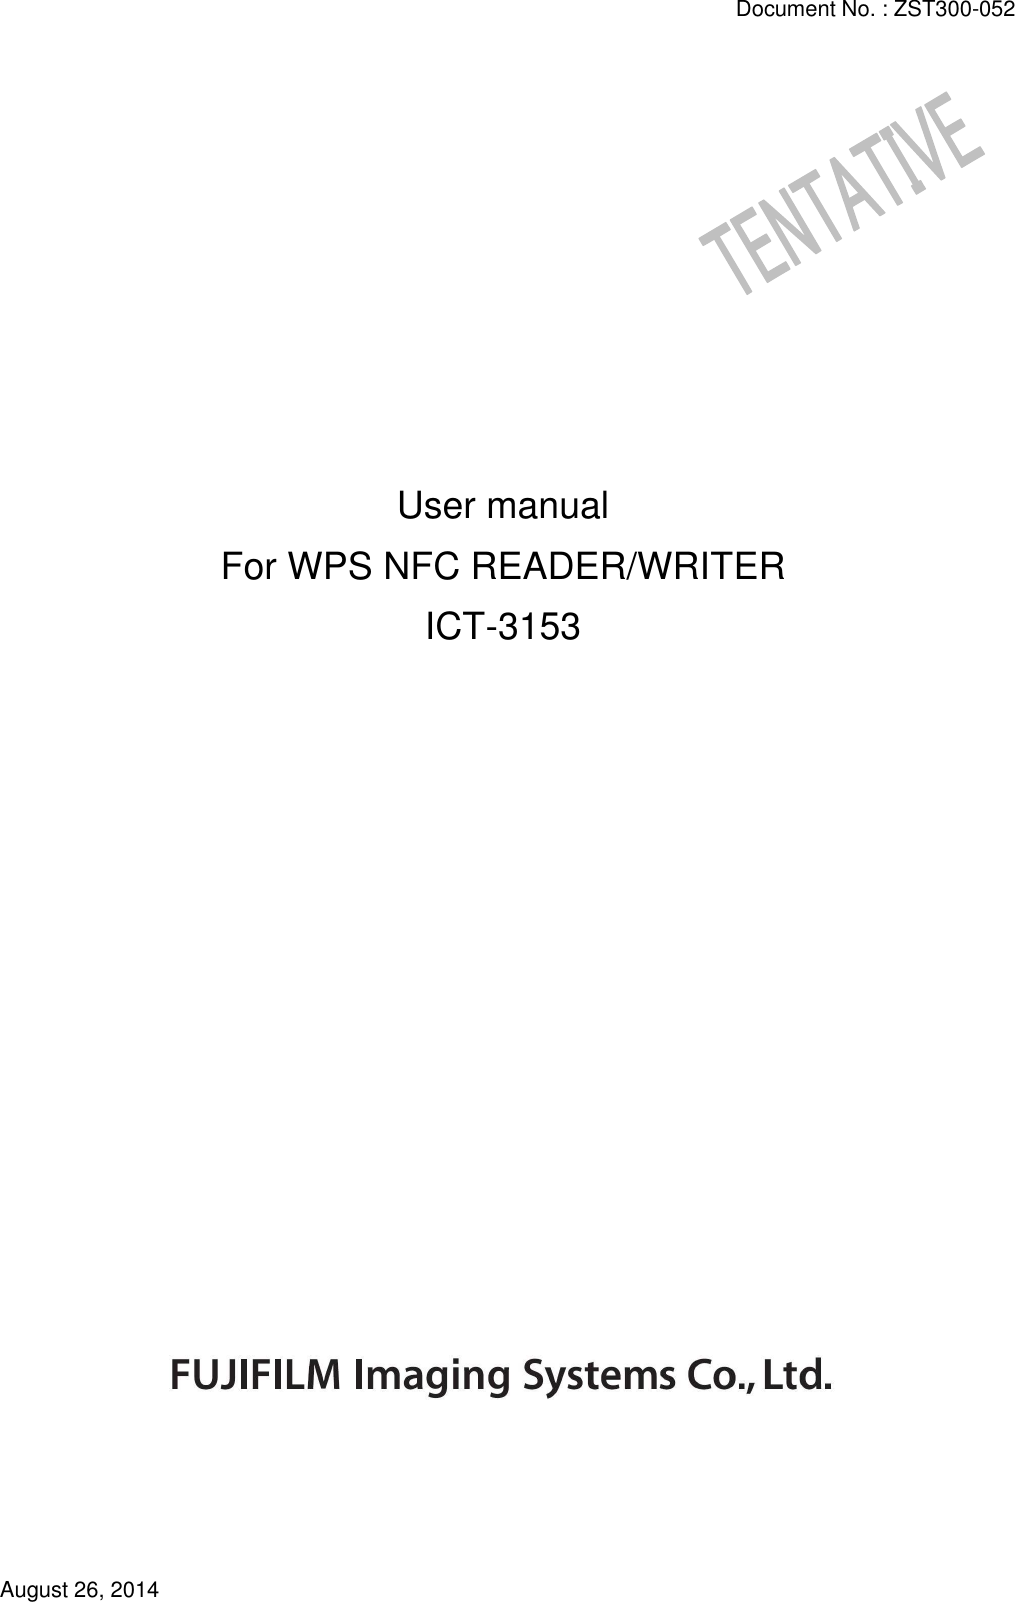  Document No. : ZST300-052 August 26, 2014                 User manual For WPS NFC READER/WRITER ICT-3153                          